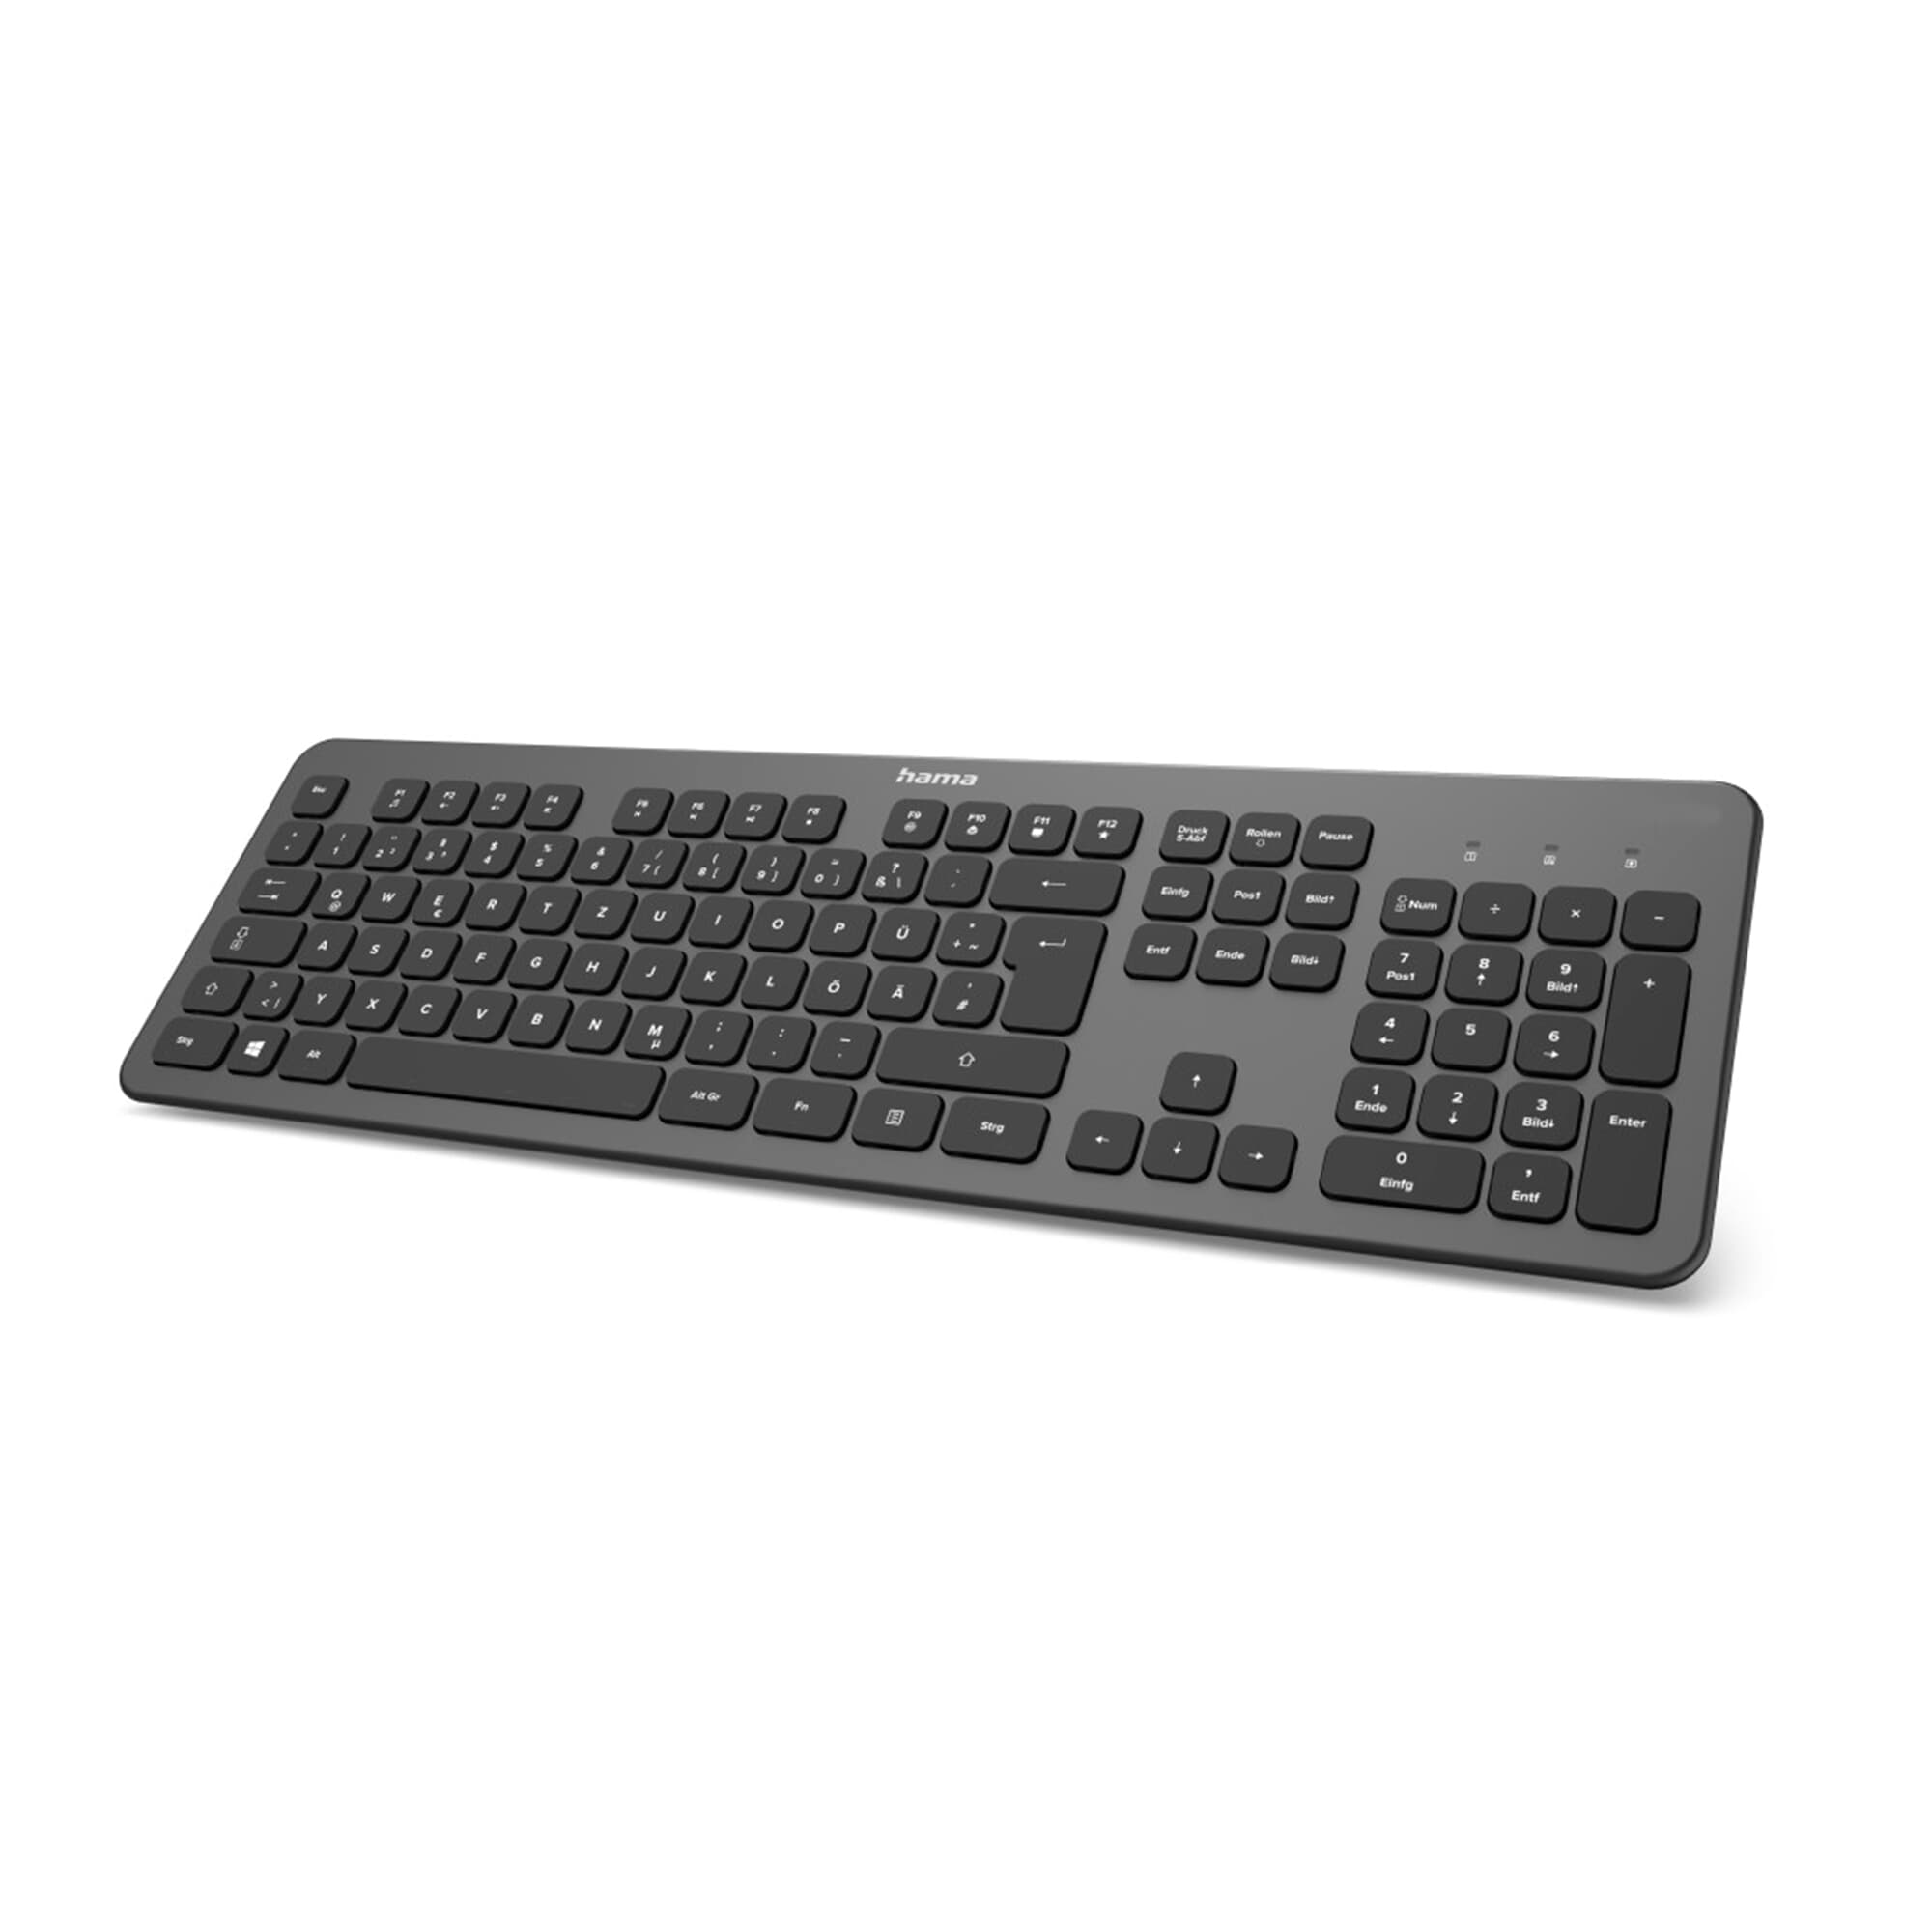 HAMA KW-700, Rubberdome Tastatur